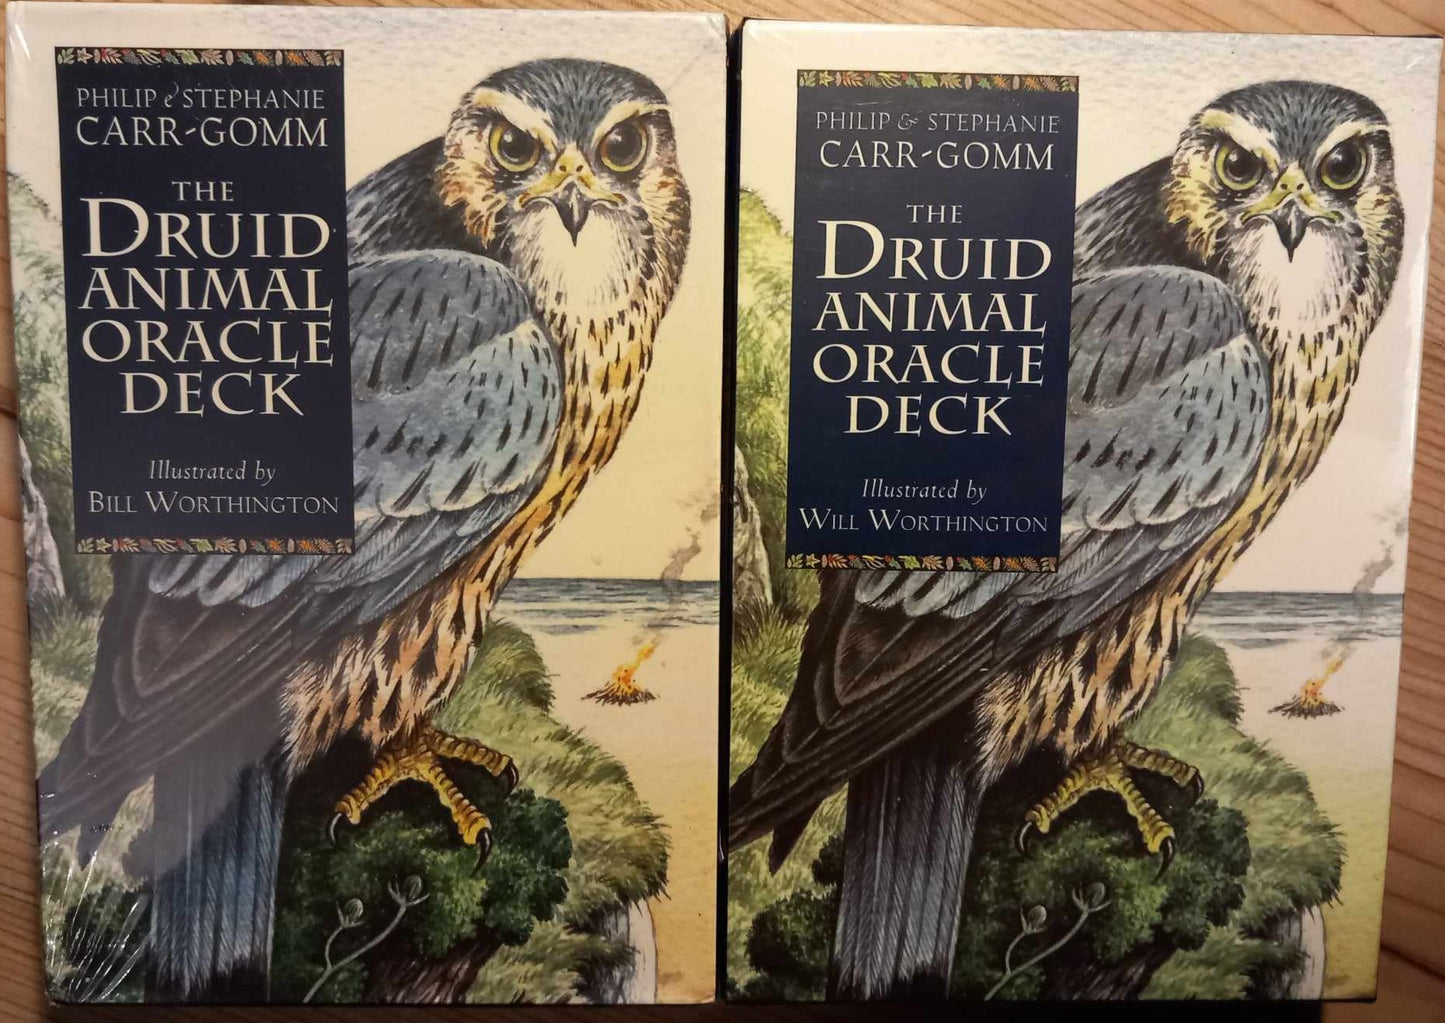 The druid animal oracle deck